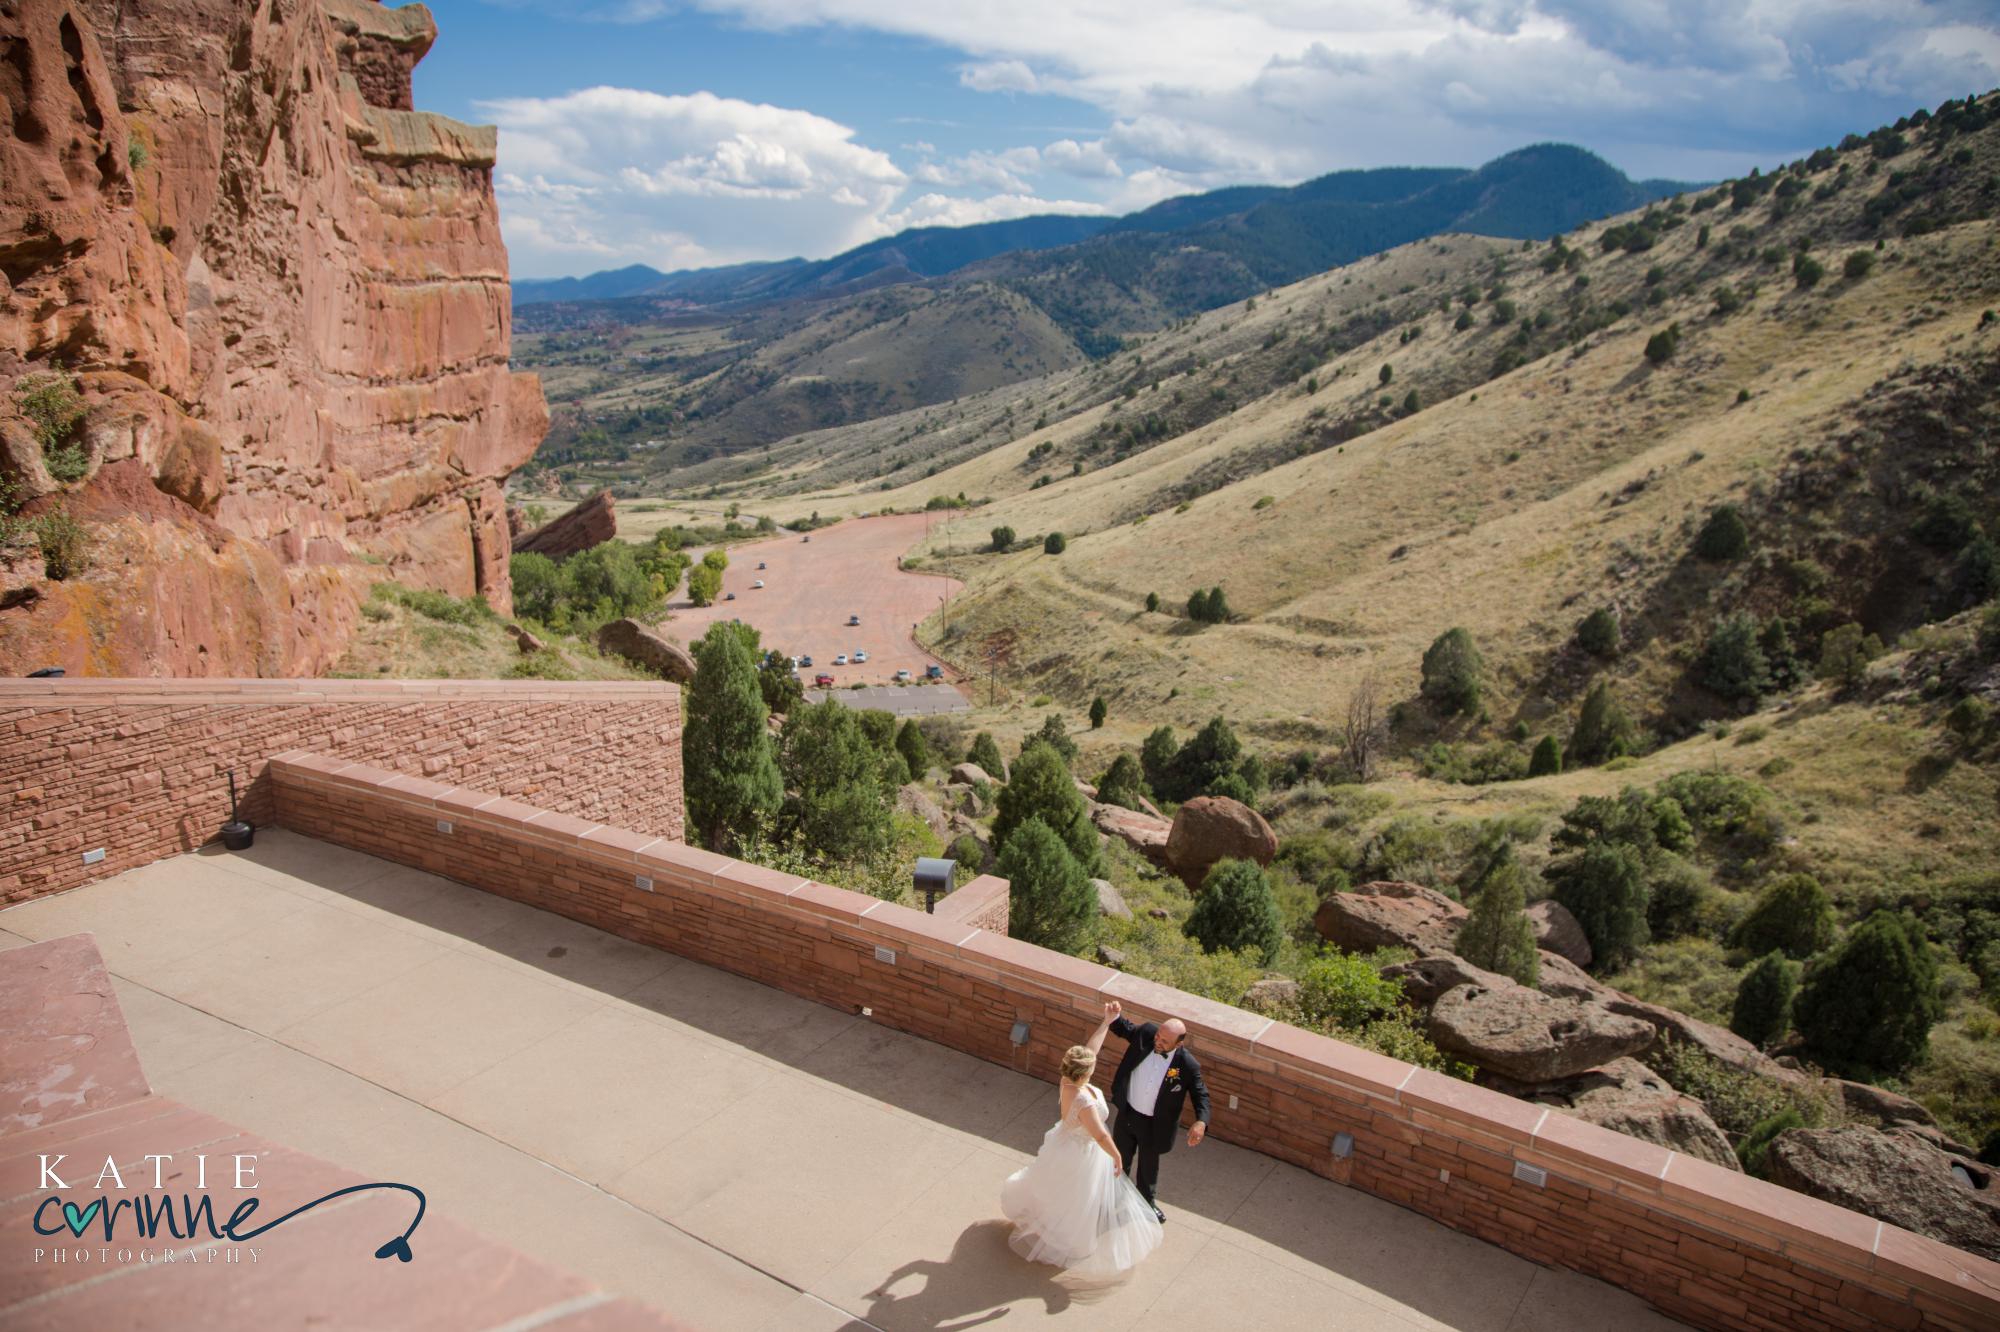 Wedding couple in scenic colorado